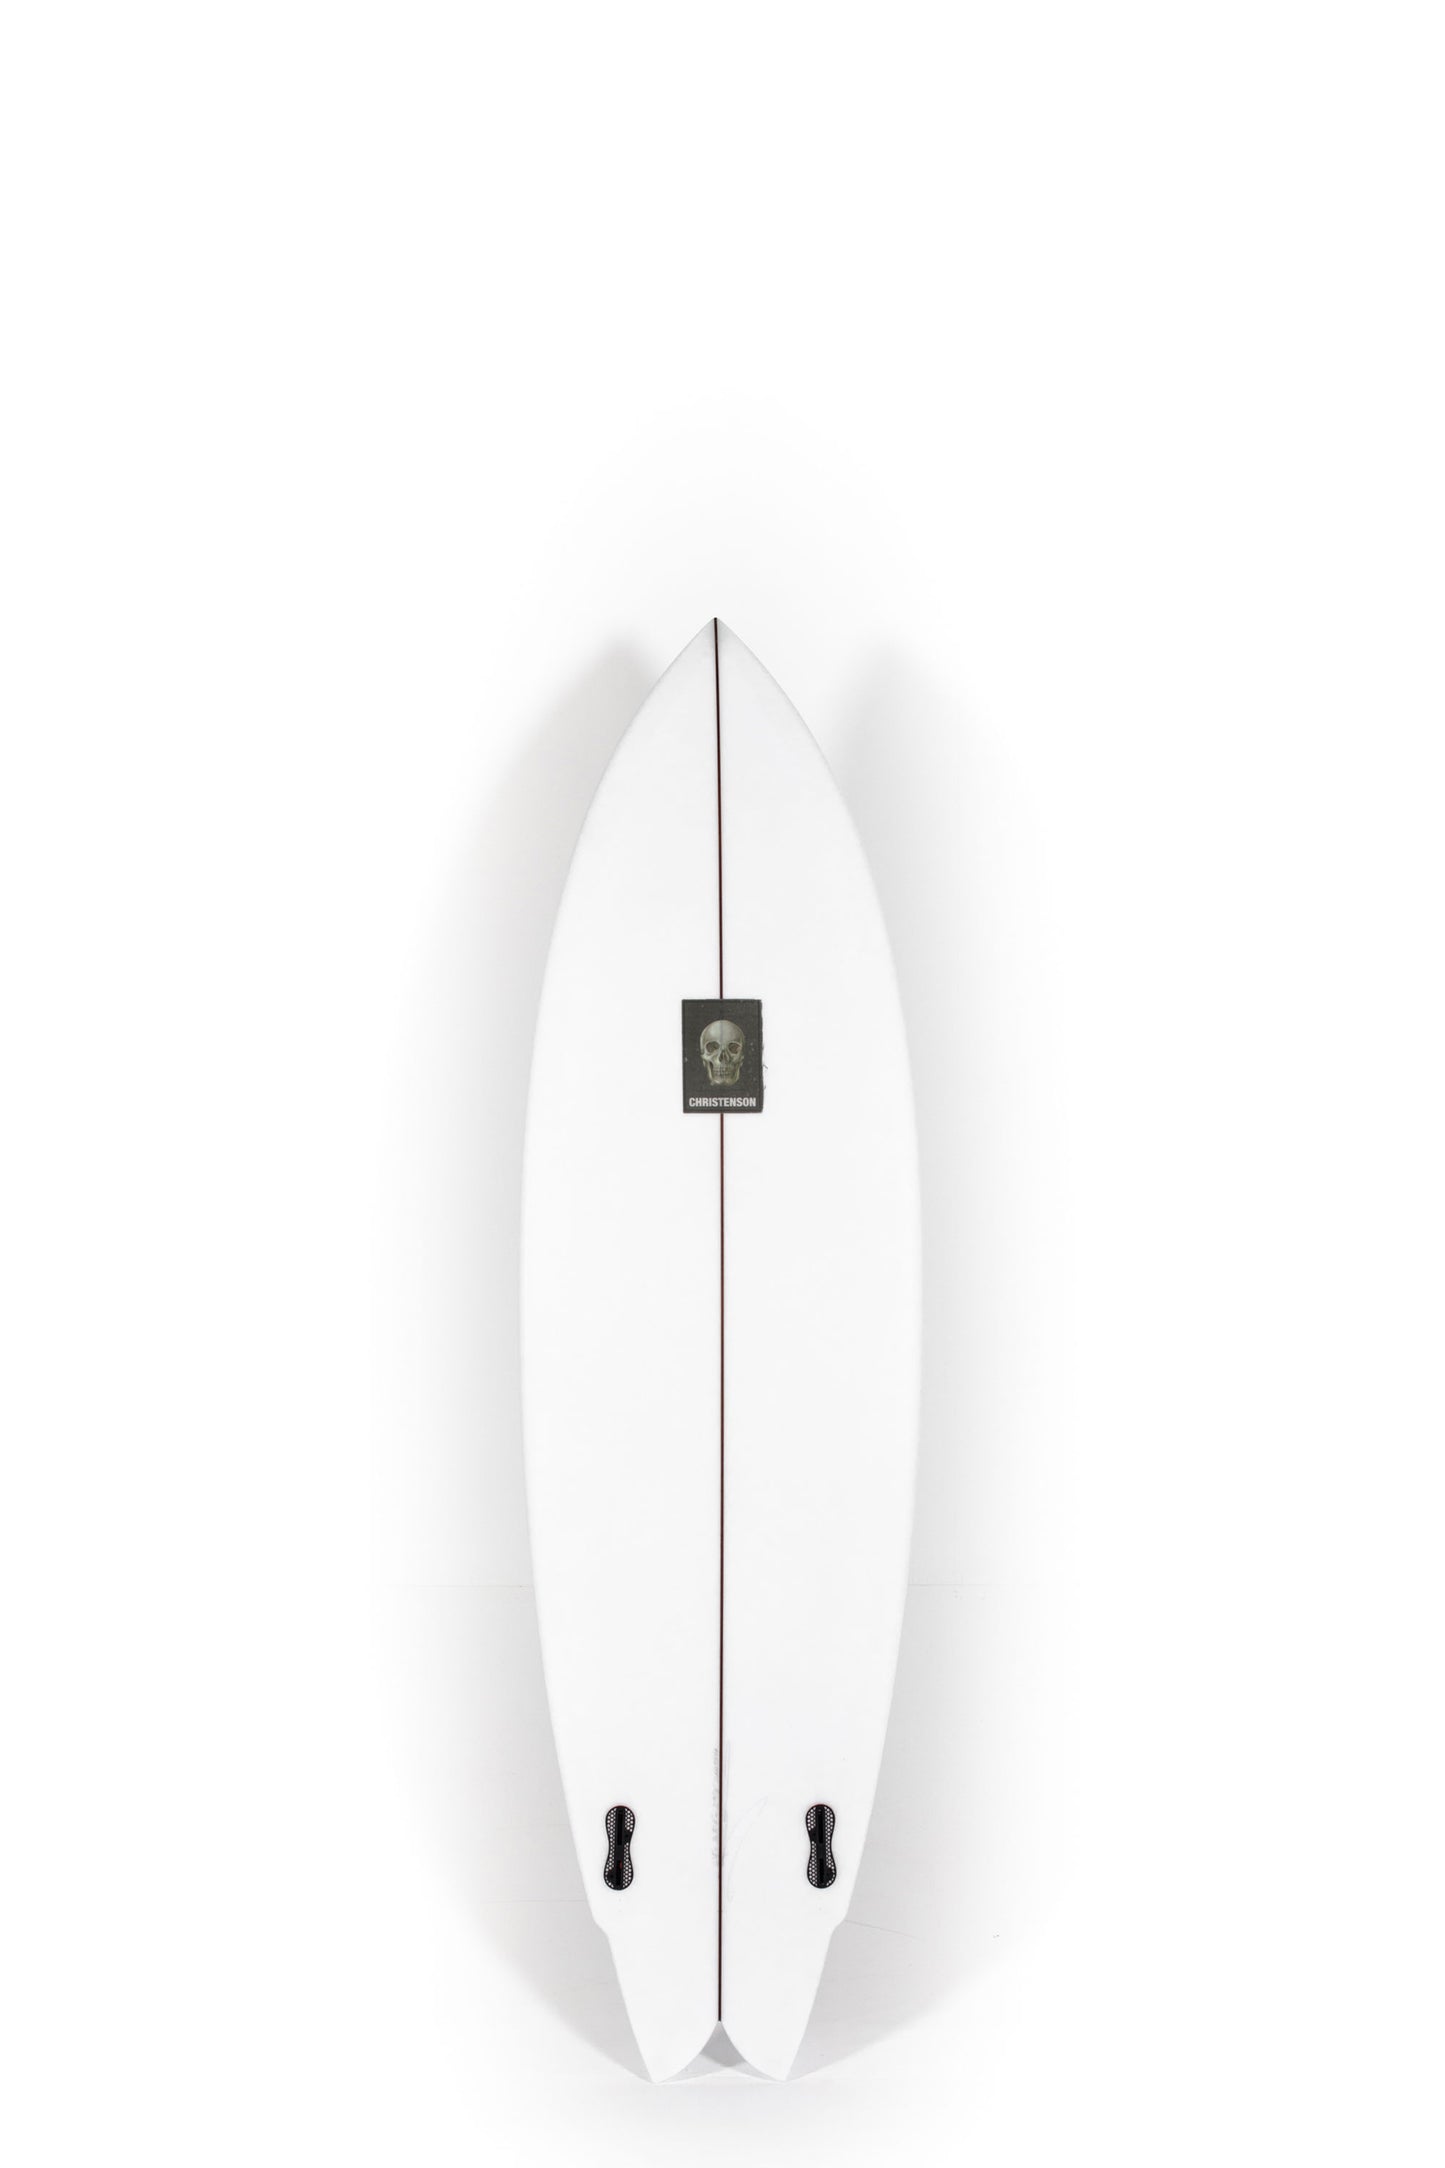 Pukas Surf Shop - Christenson Surfboard  - WOLVERINE by Chris Christenson - 6’4 x 20 5/8 x 2 9/16 - CX05371